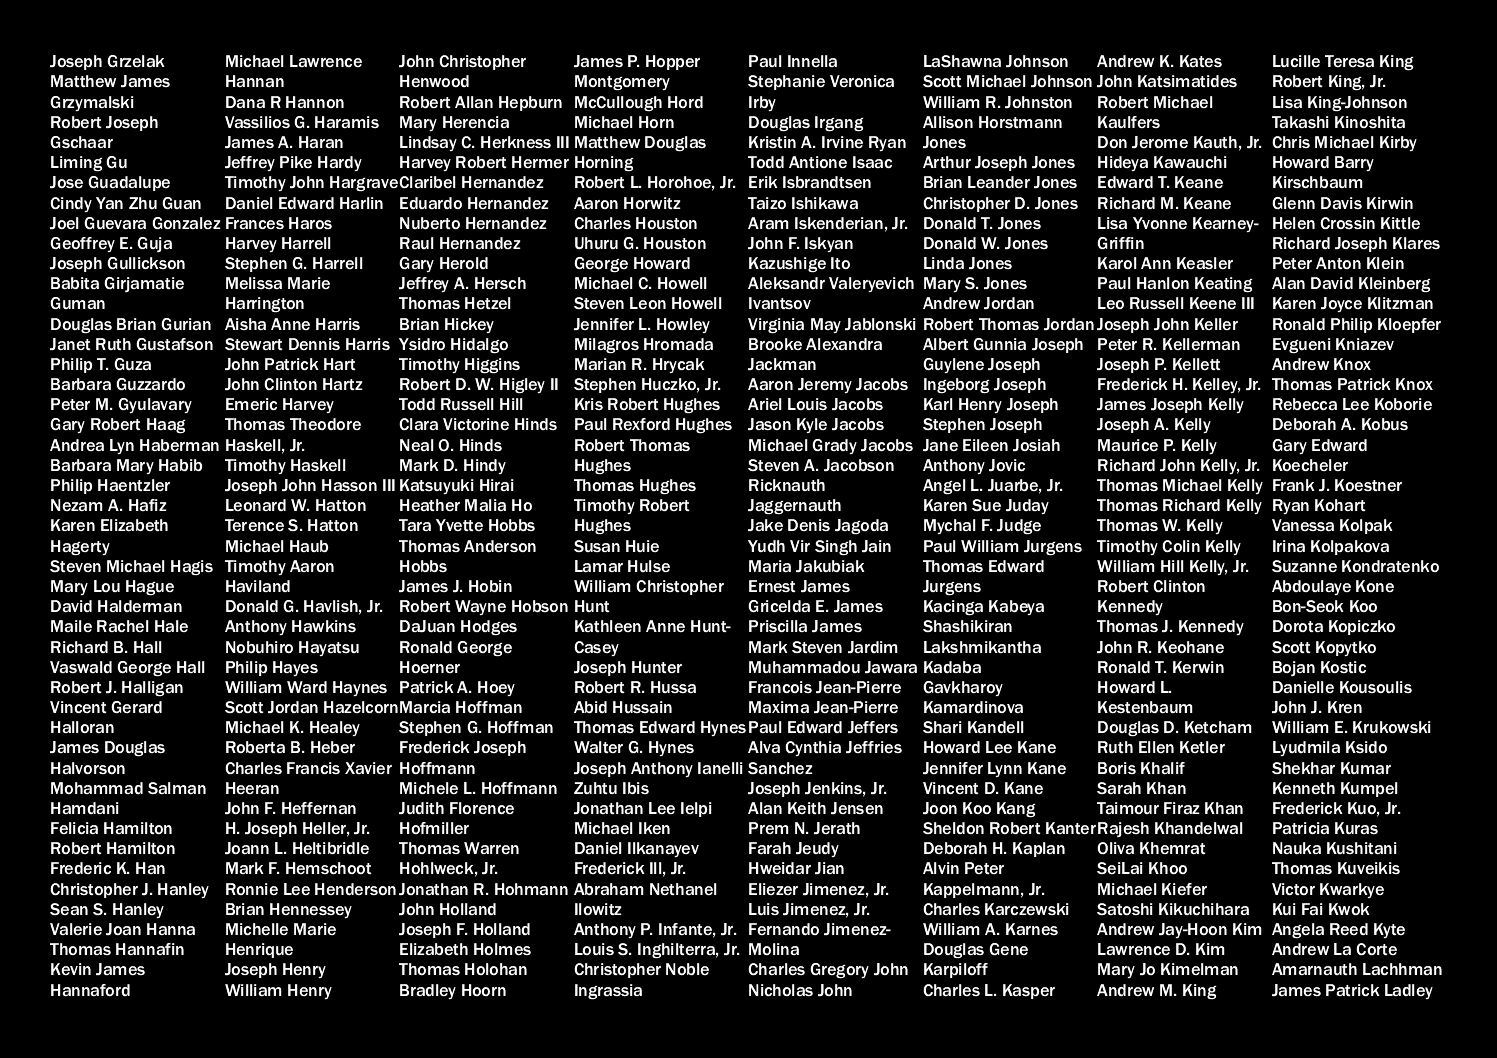 list-victims-11092001-4